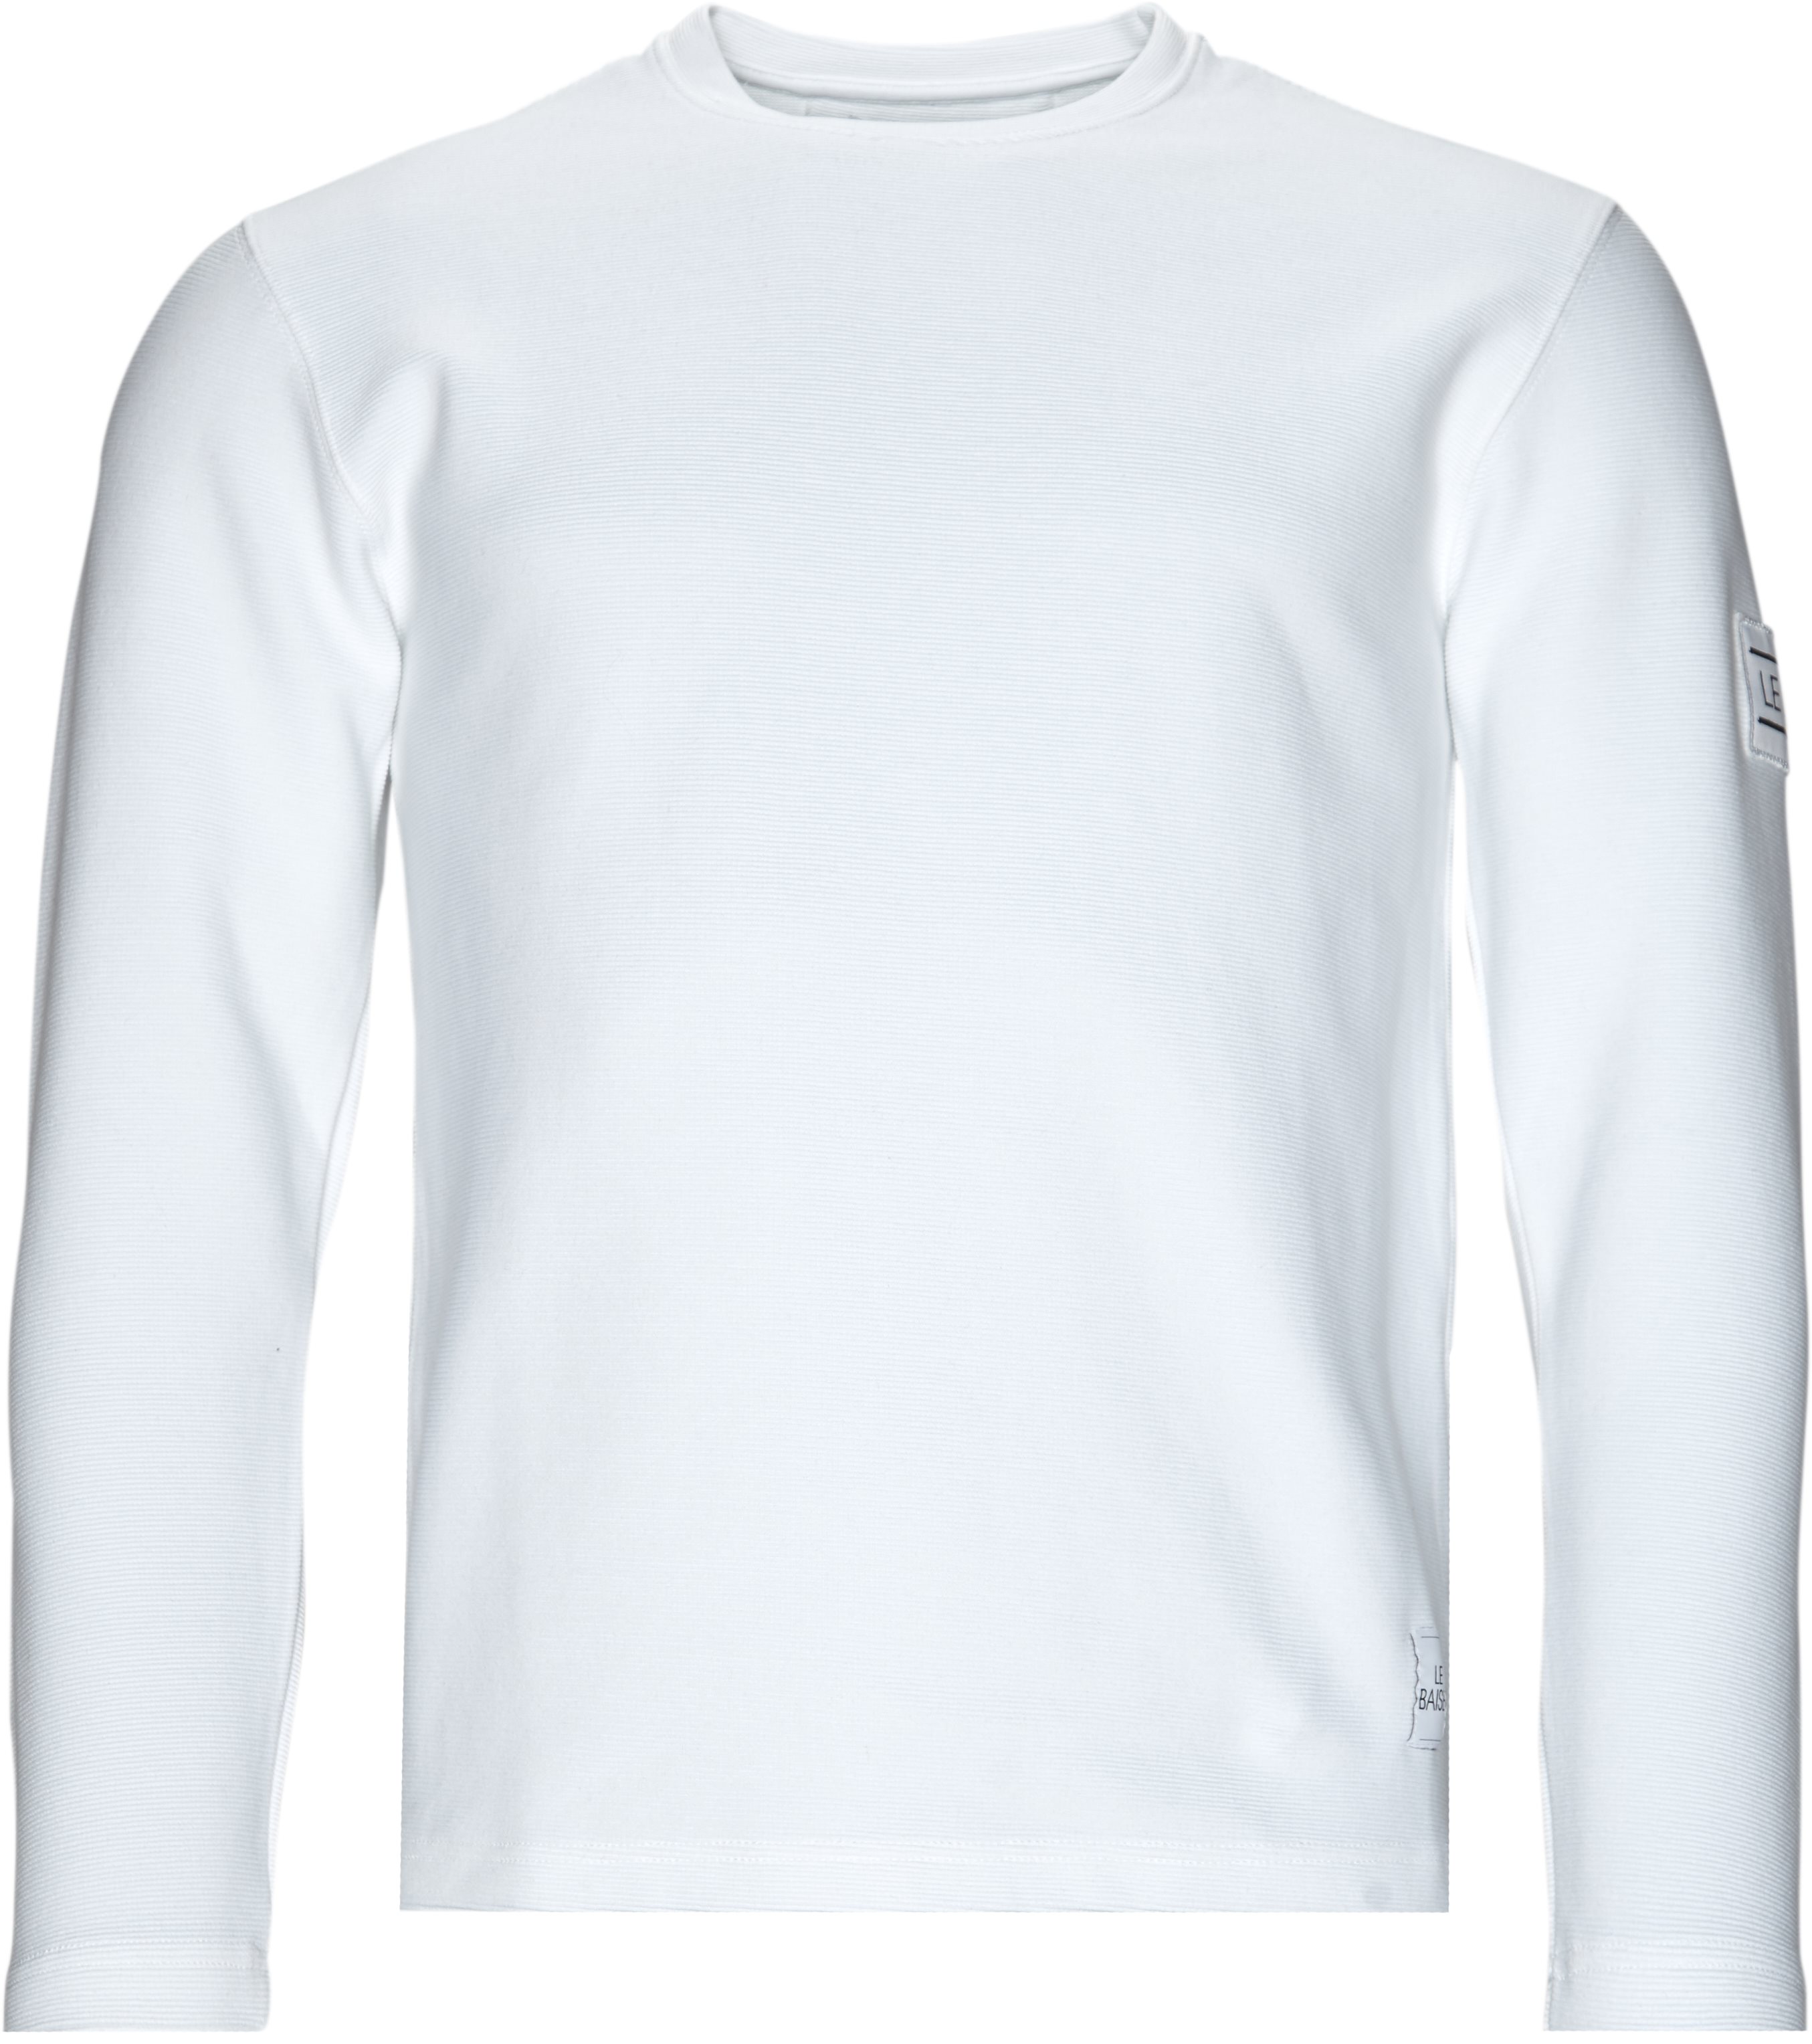 Flores - T-shirts - Regular fit - White